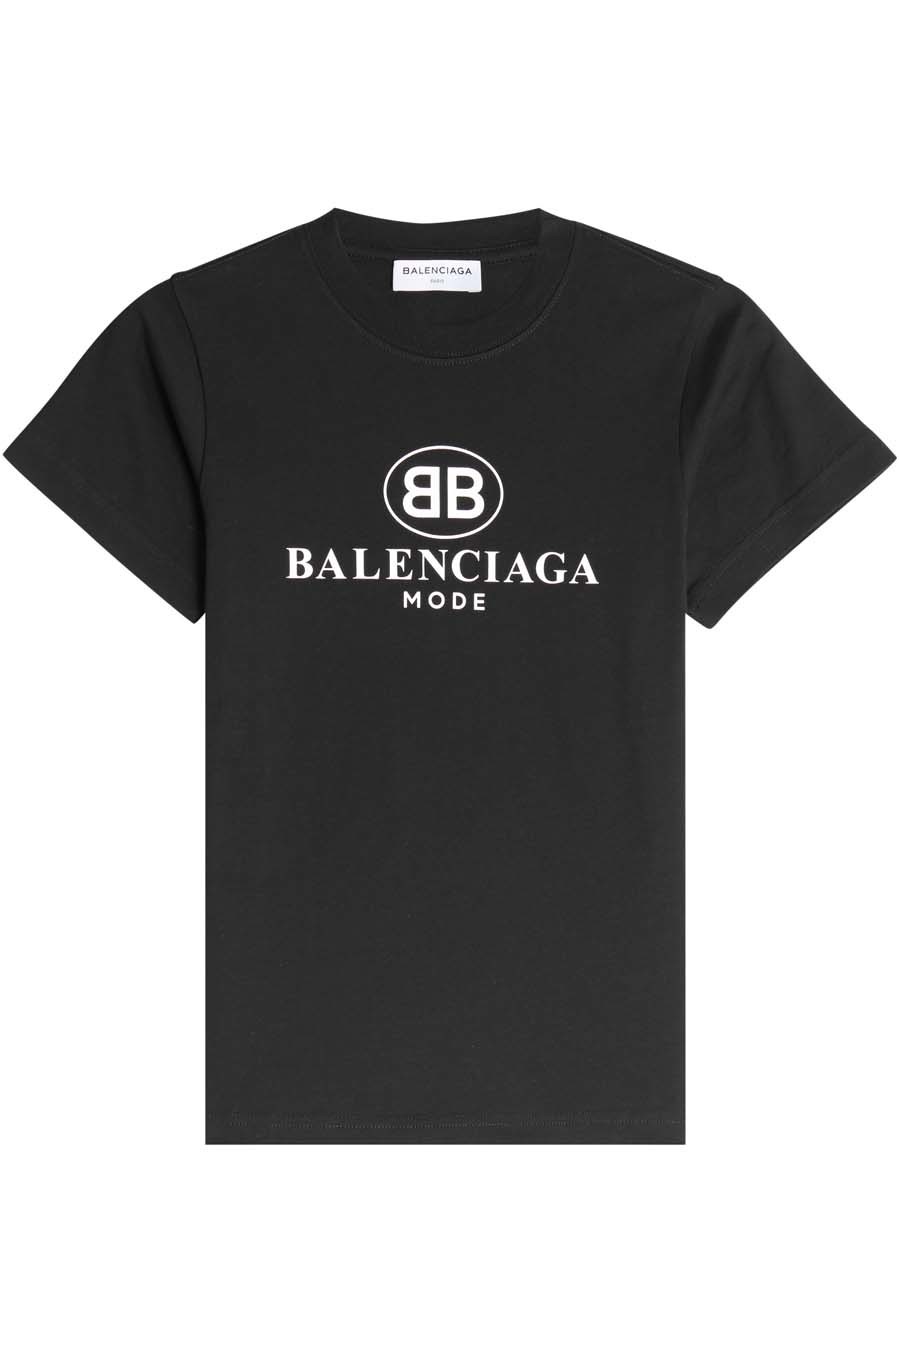 Camiseta de algodn negra con mensaje (295 euros).